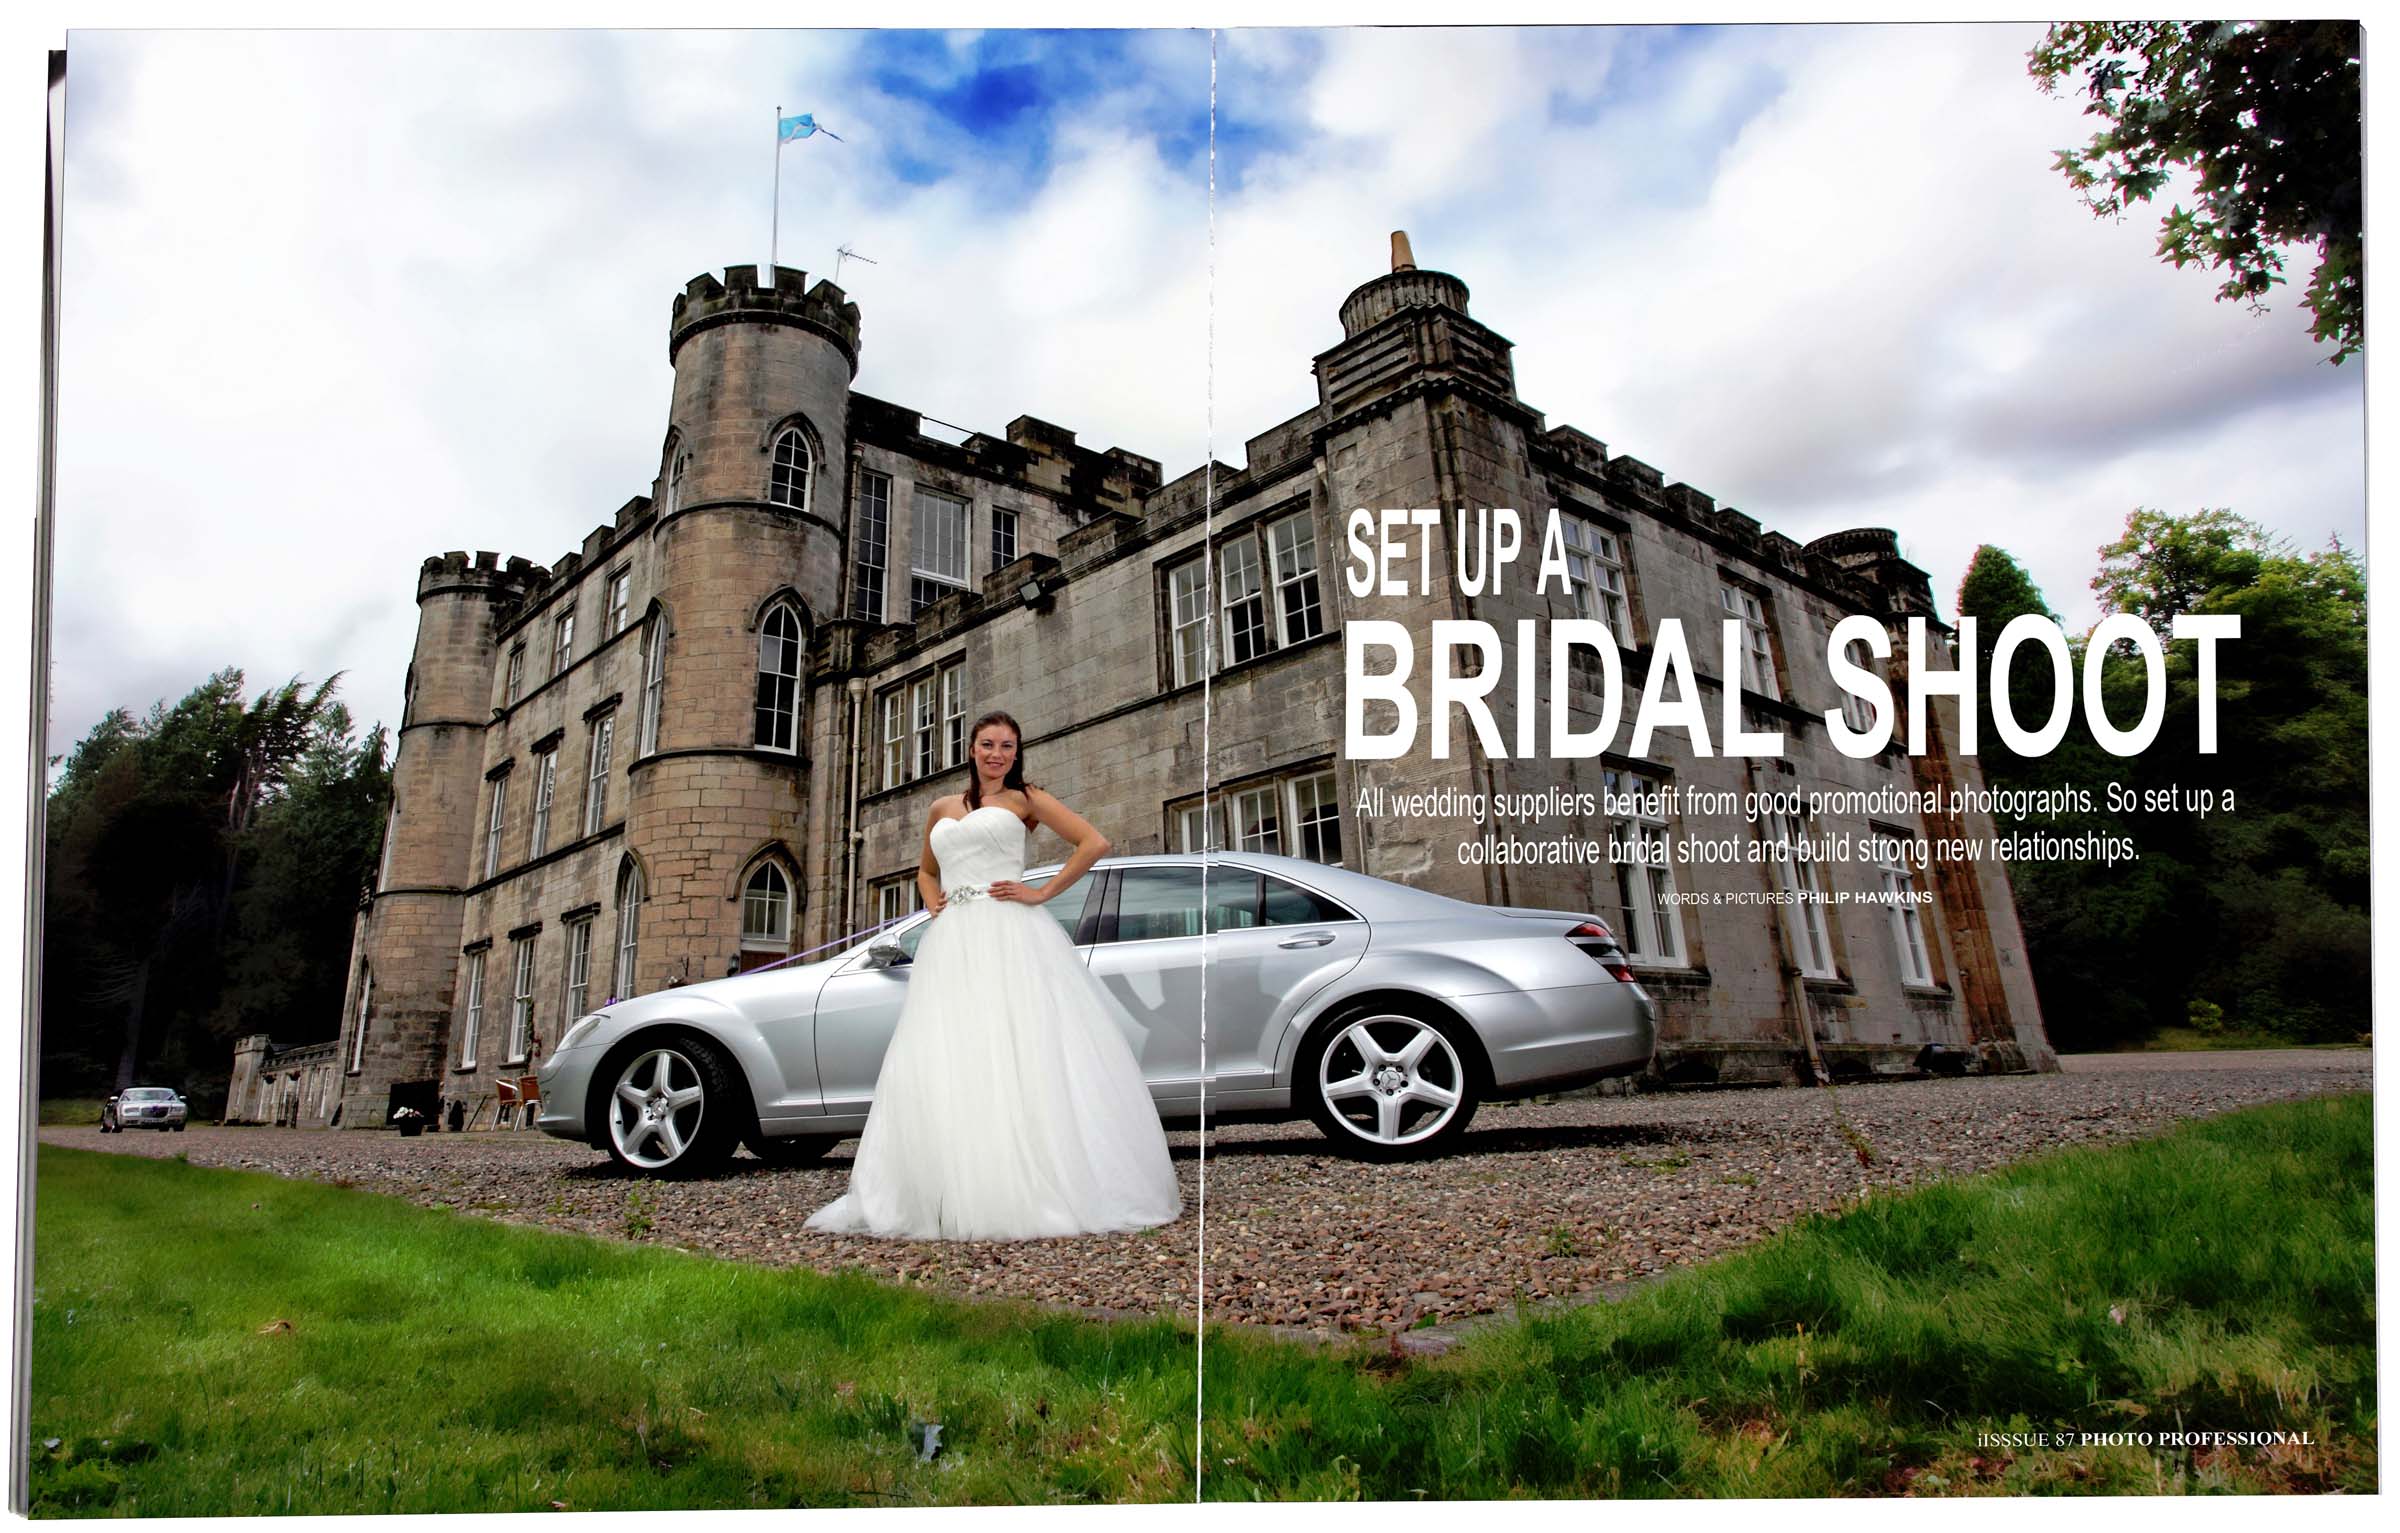 Bridal Shoot magazine feature